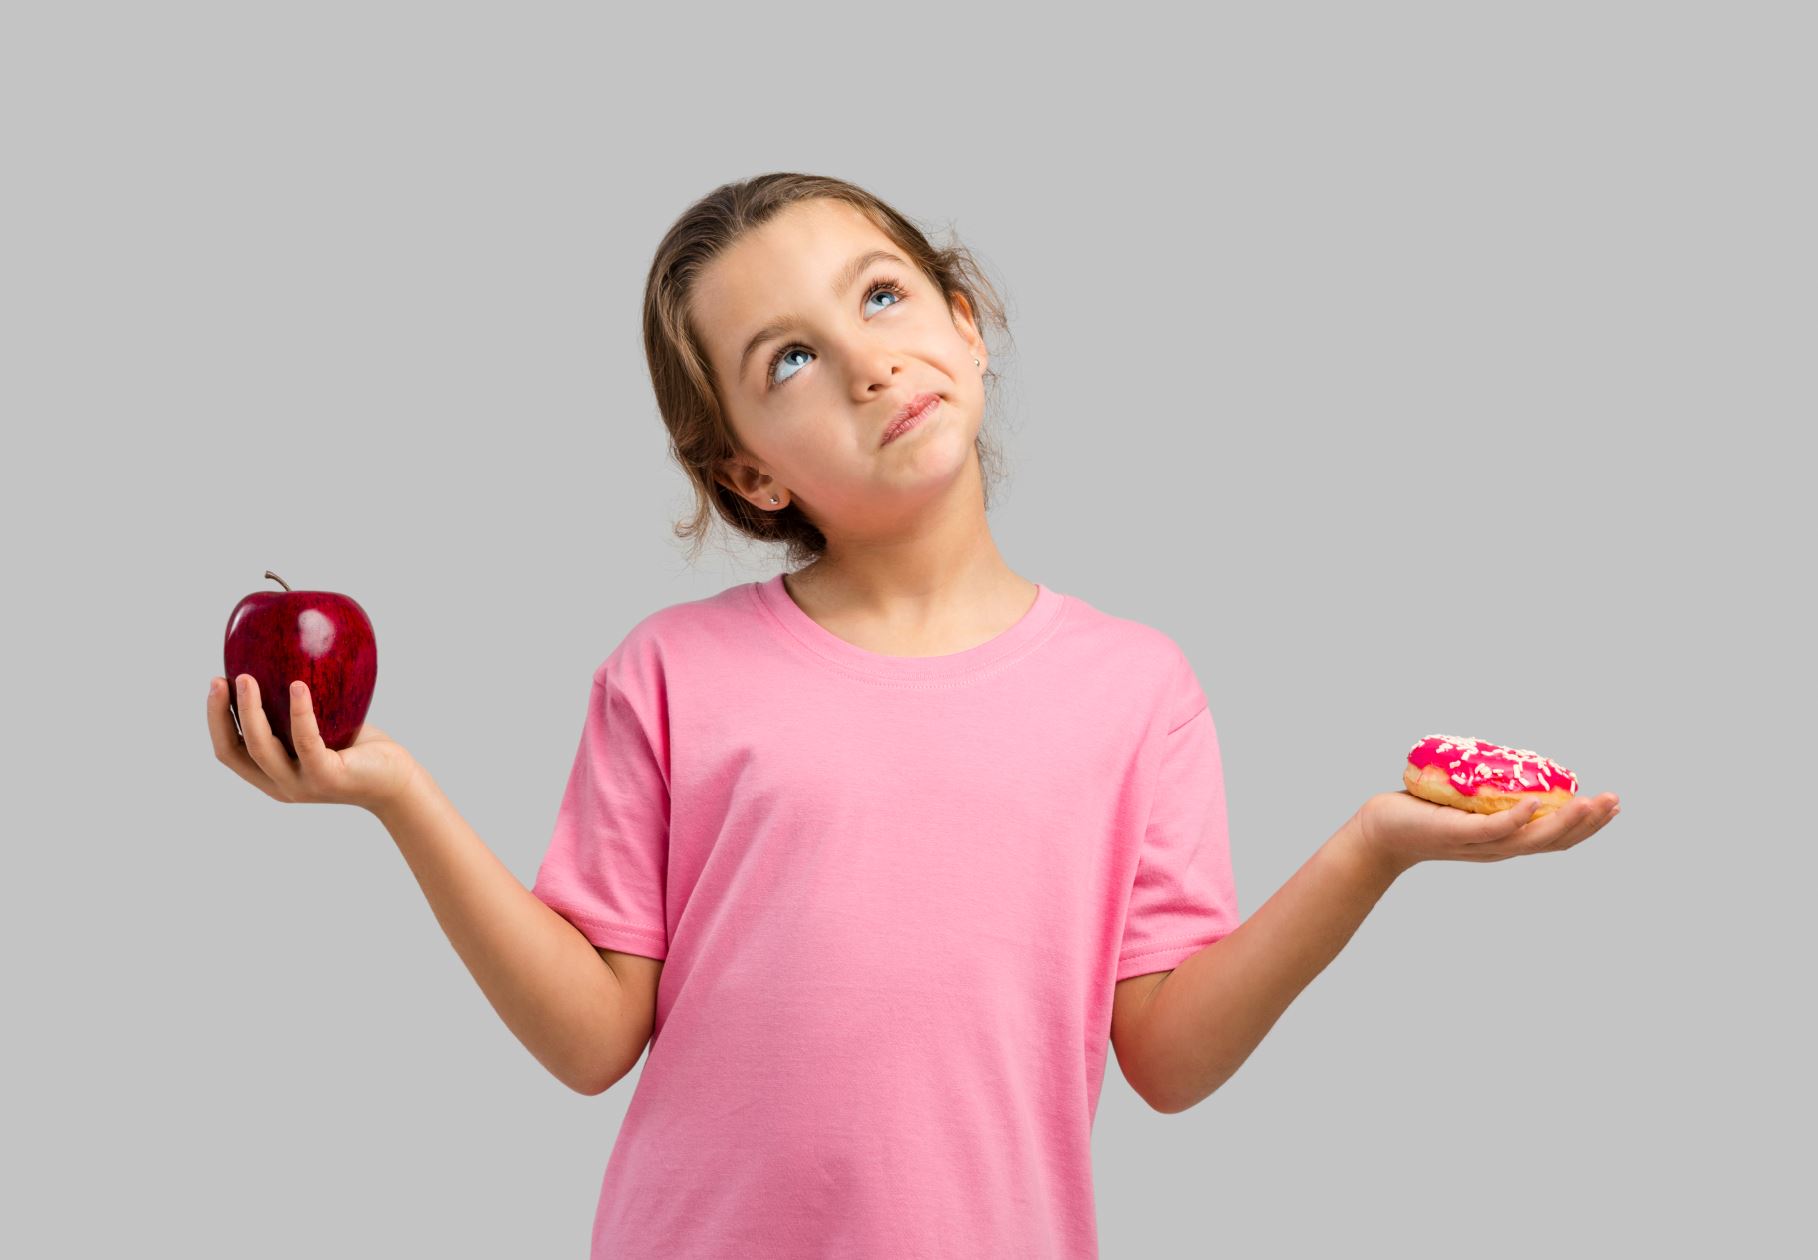 Image result for apple vs donut